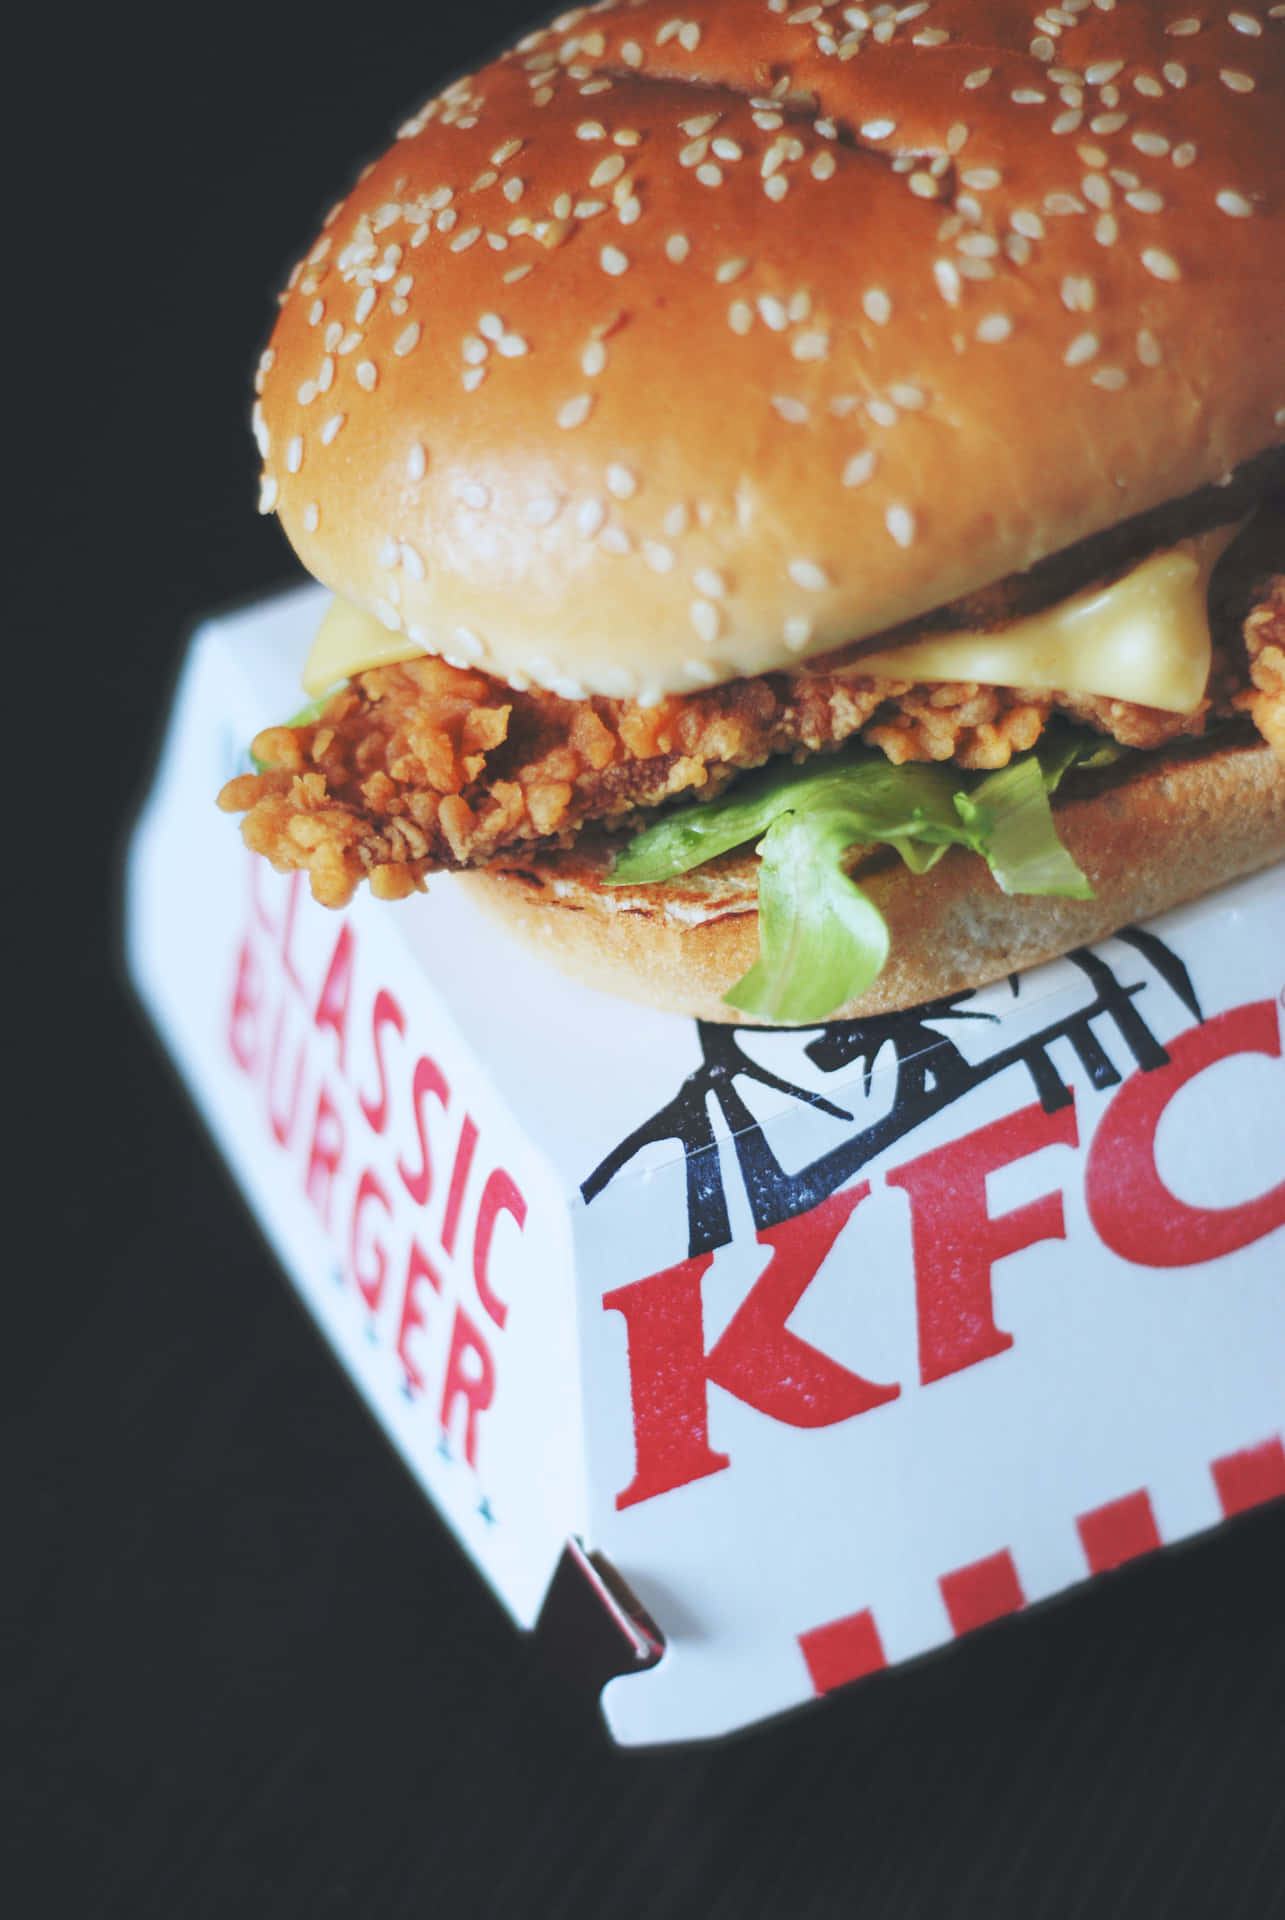 Enjoy the delicious, crispy taste of KFC's fried chicken